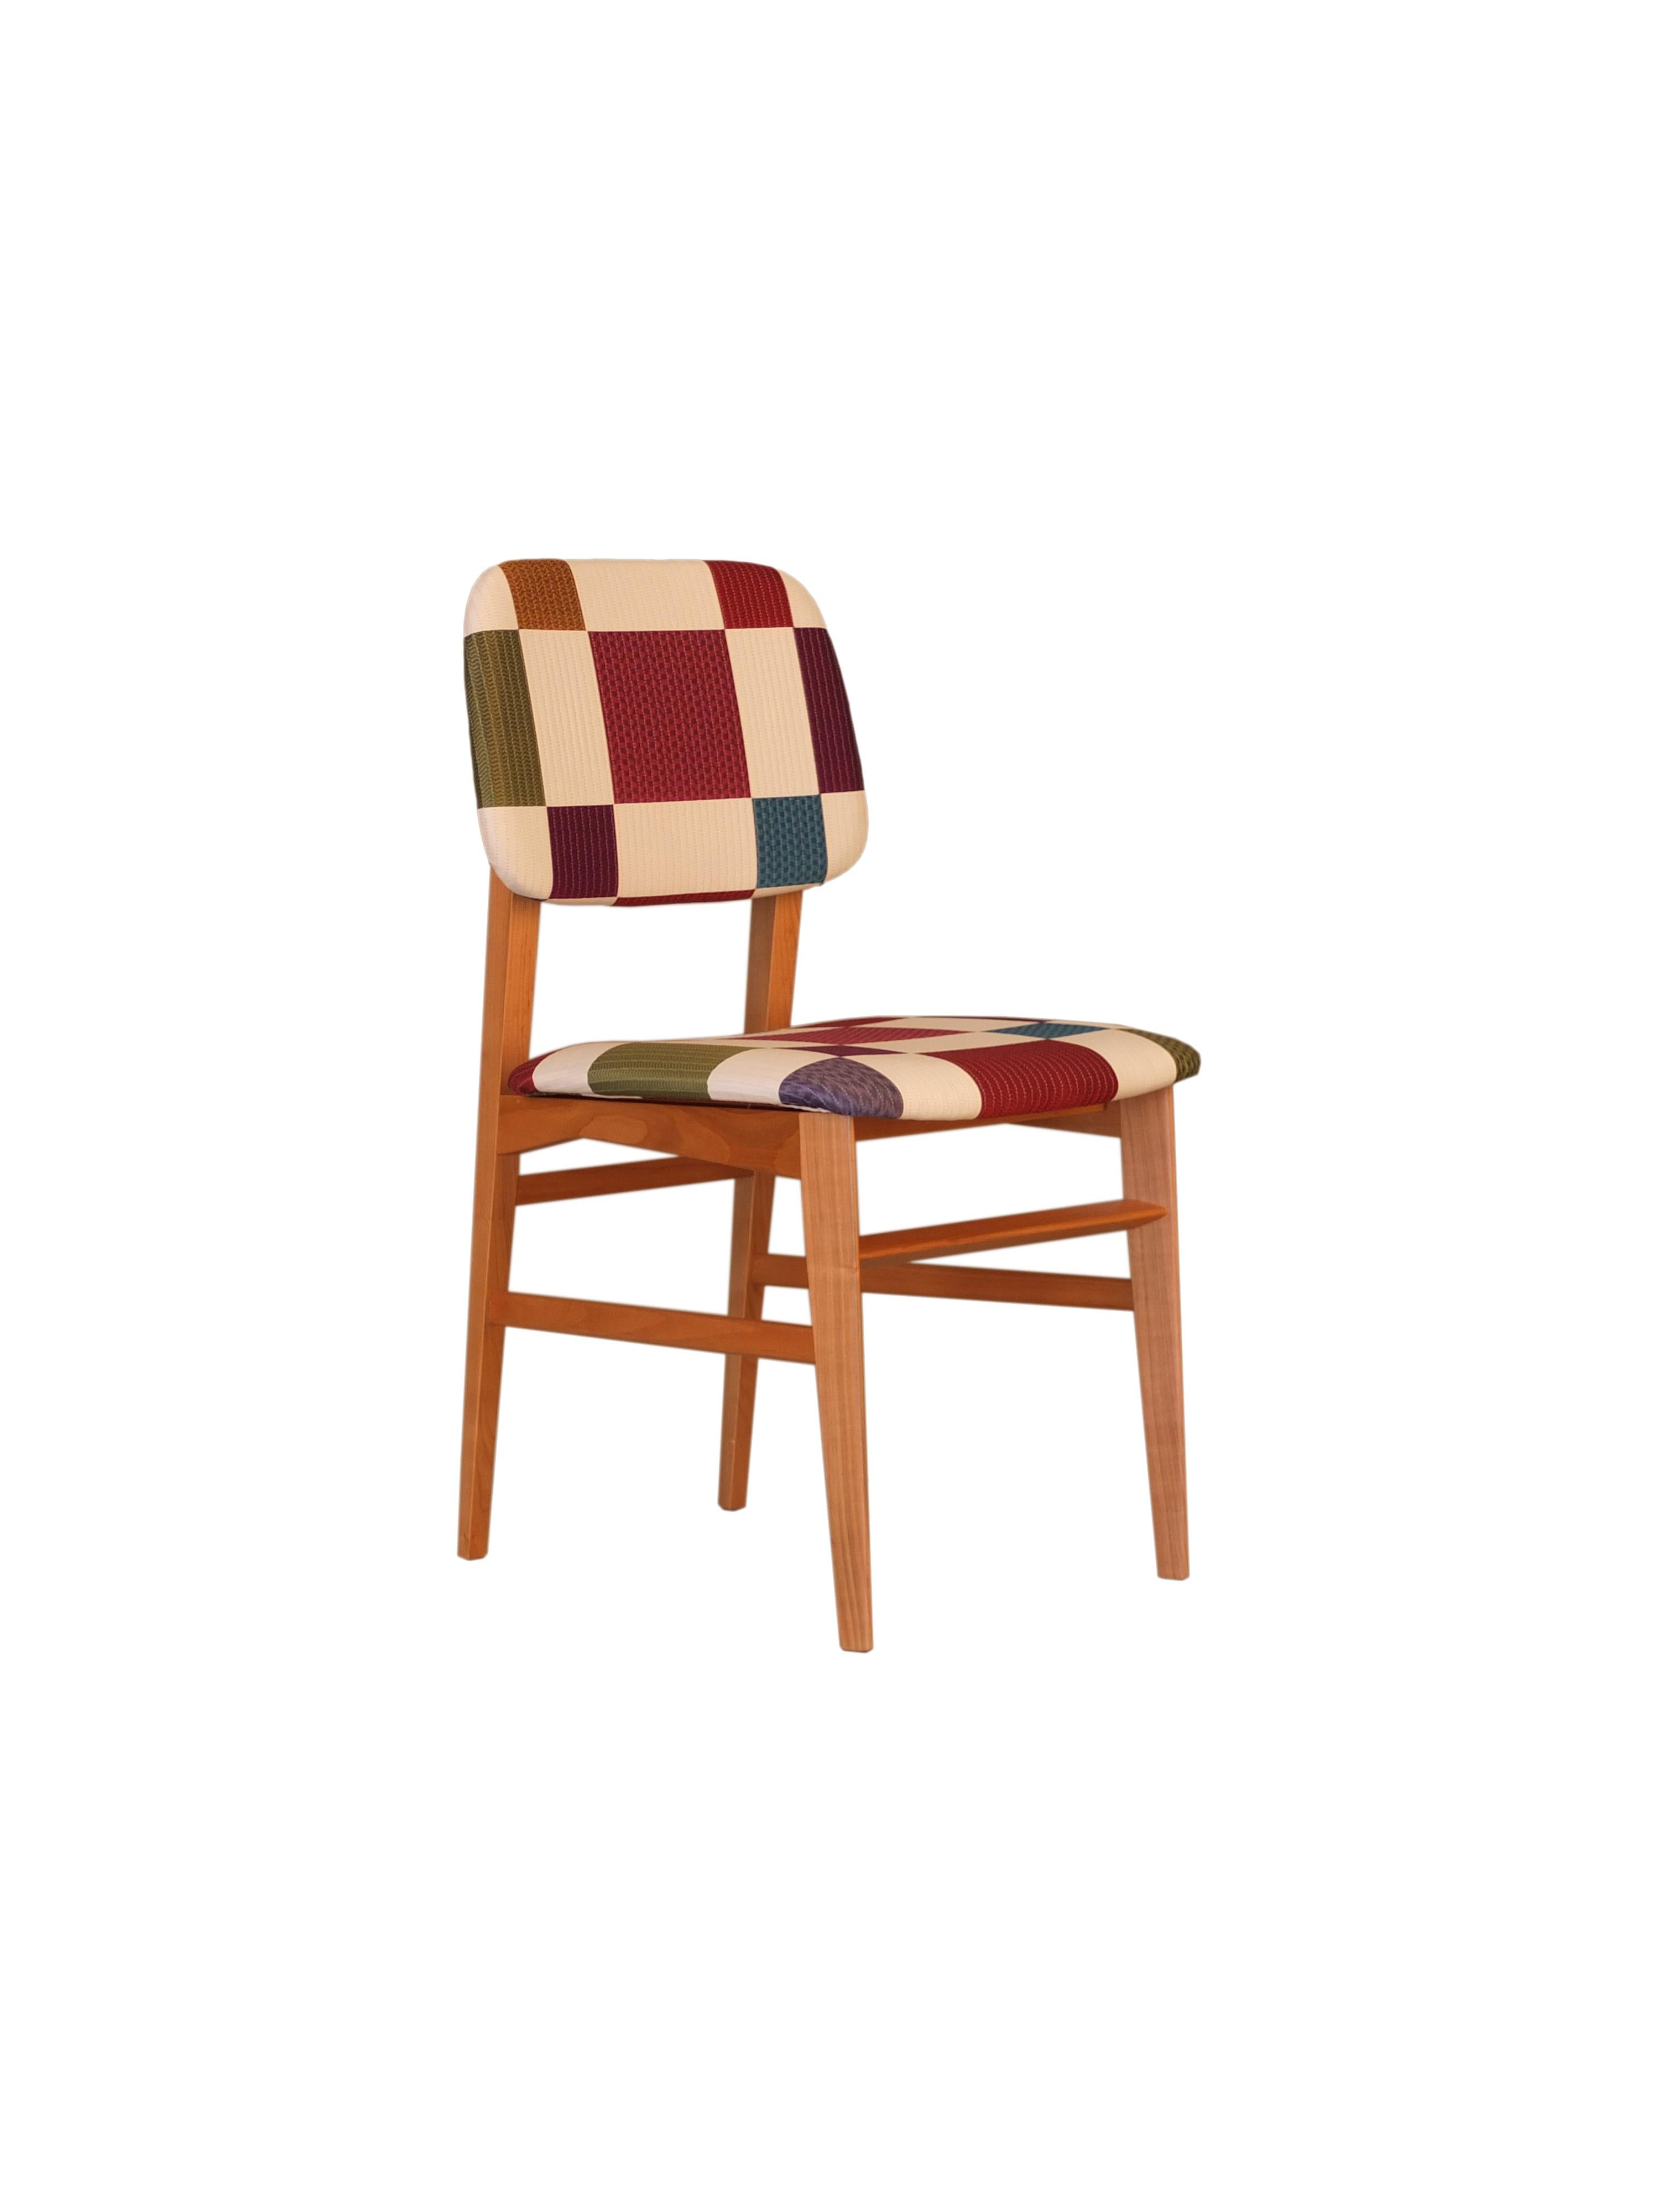 Morelato, Savina Chair in Ash Wood 1